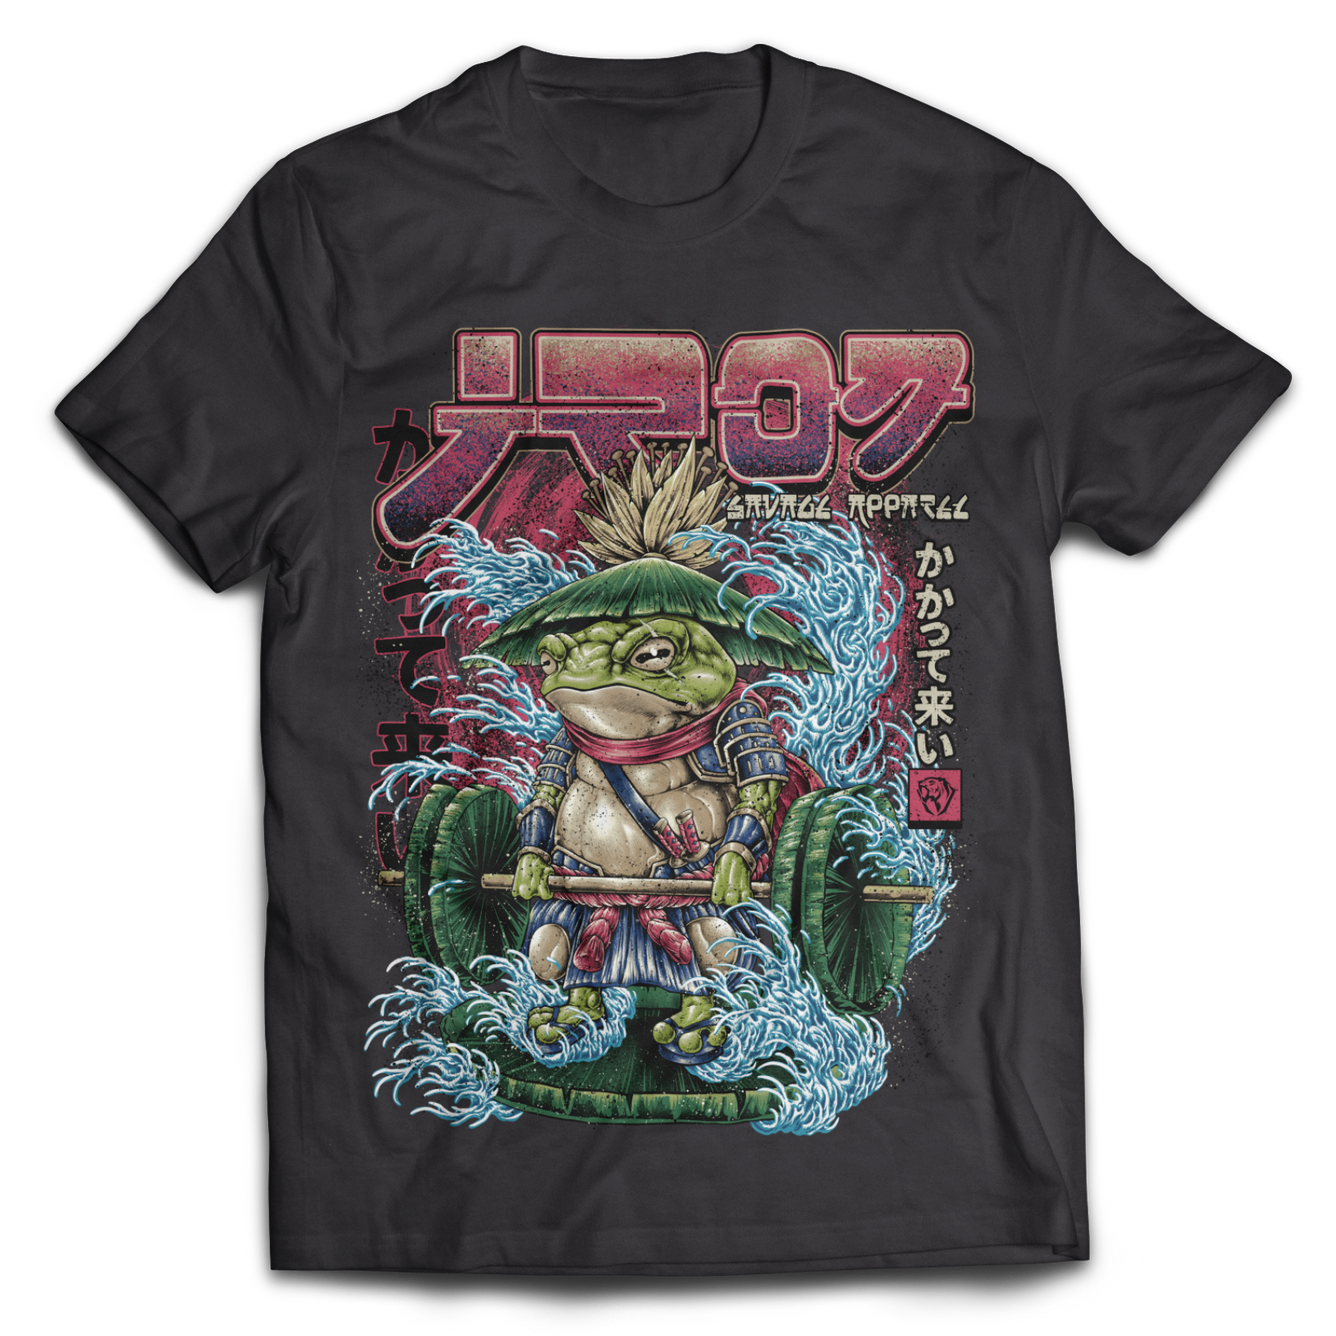 Samurai Frog: Bring it on T-Shirt